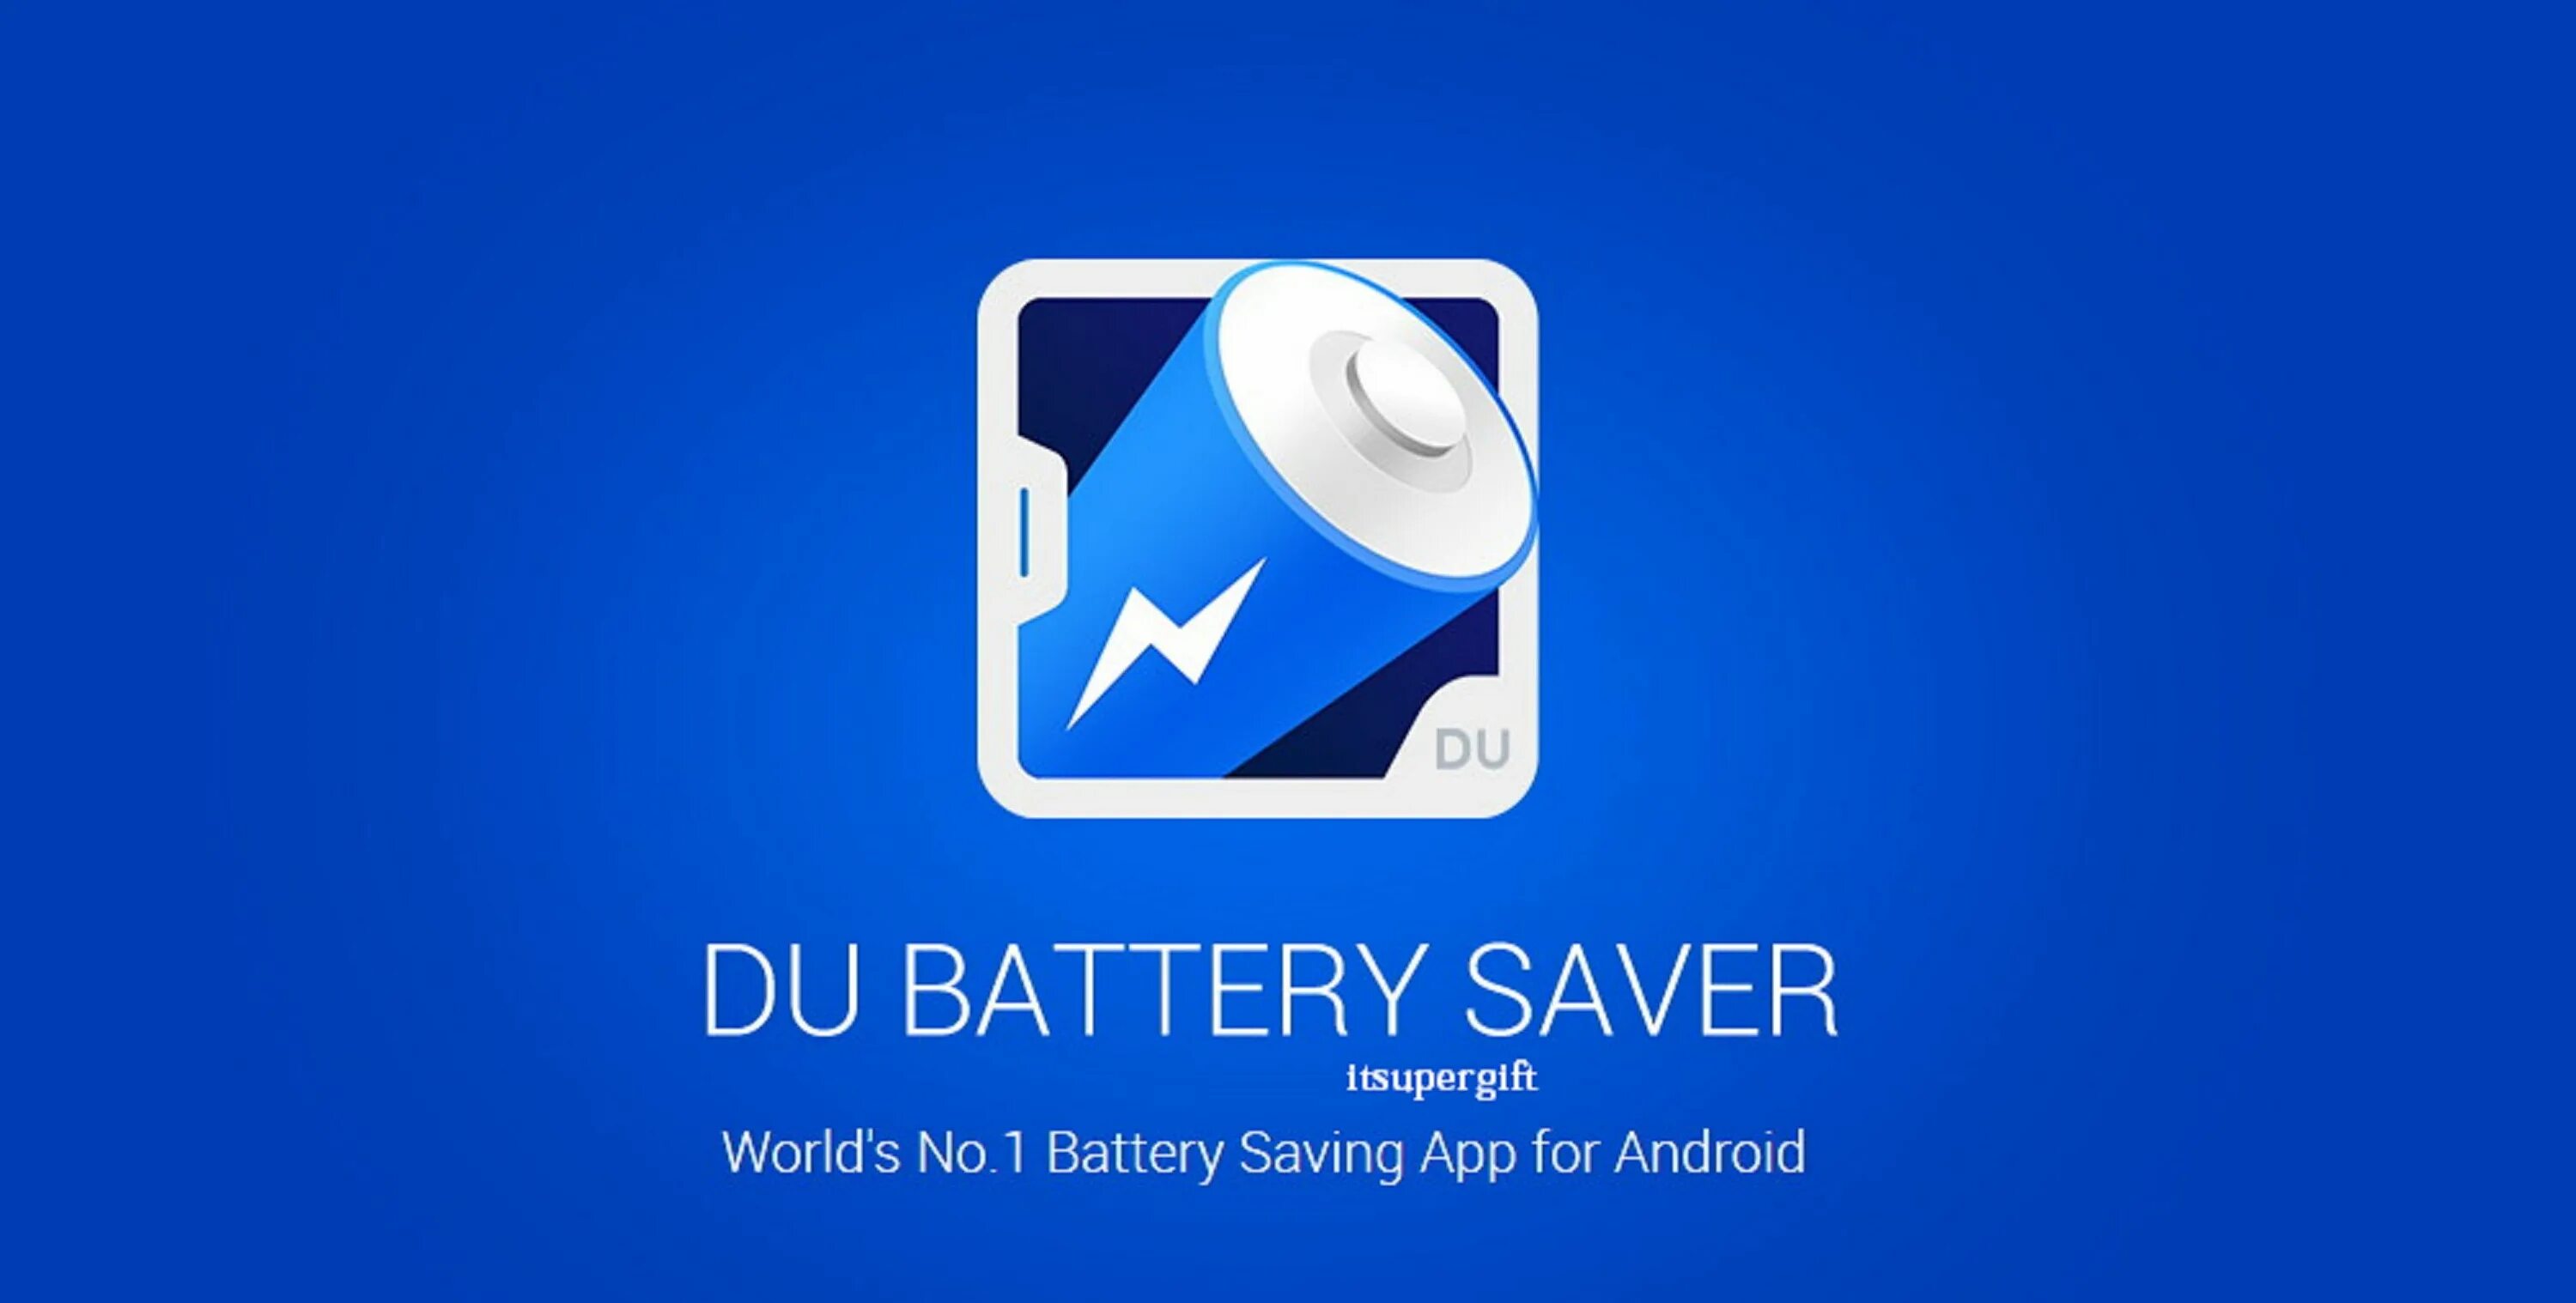 Du battery. Battery Saver. Du Battery Saver. Battery app. Phone Saver.